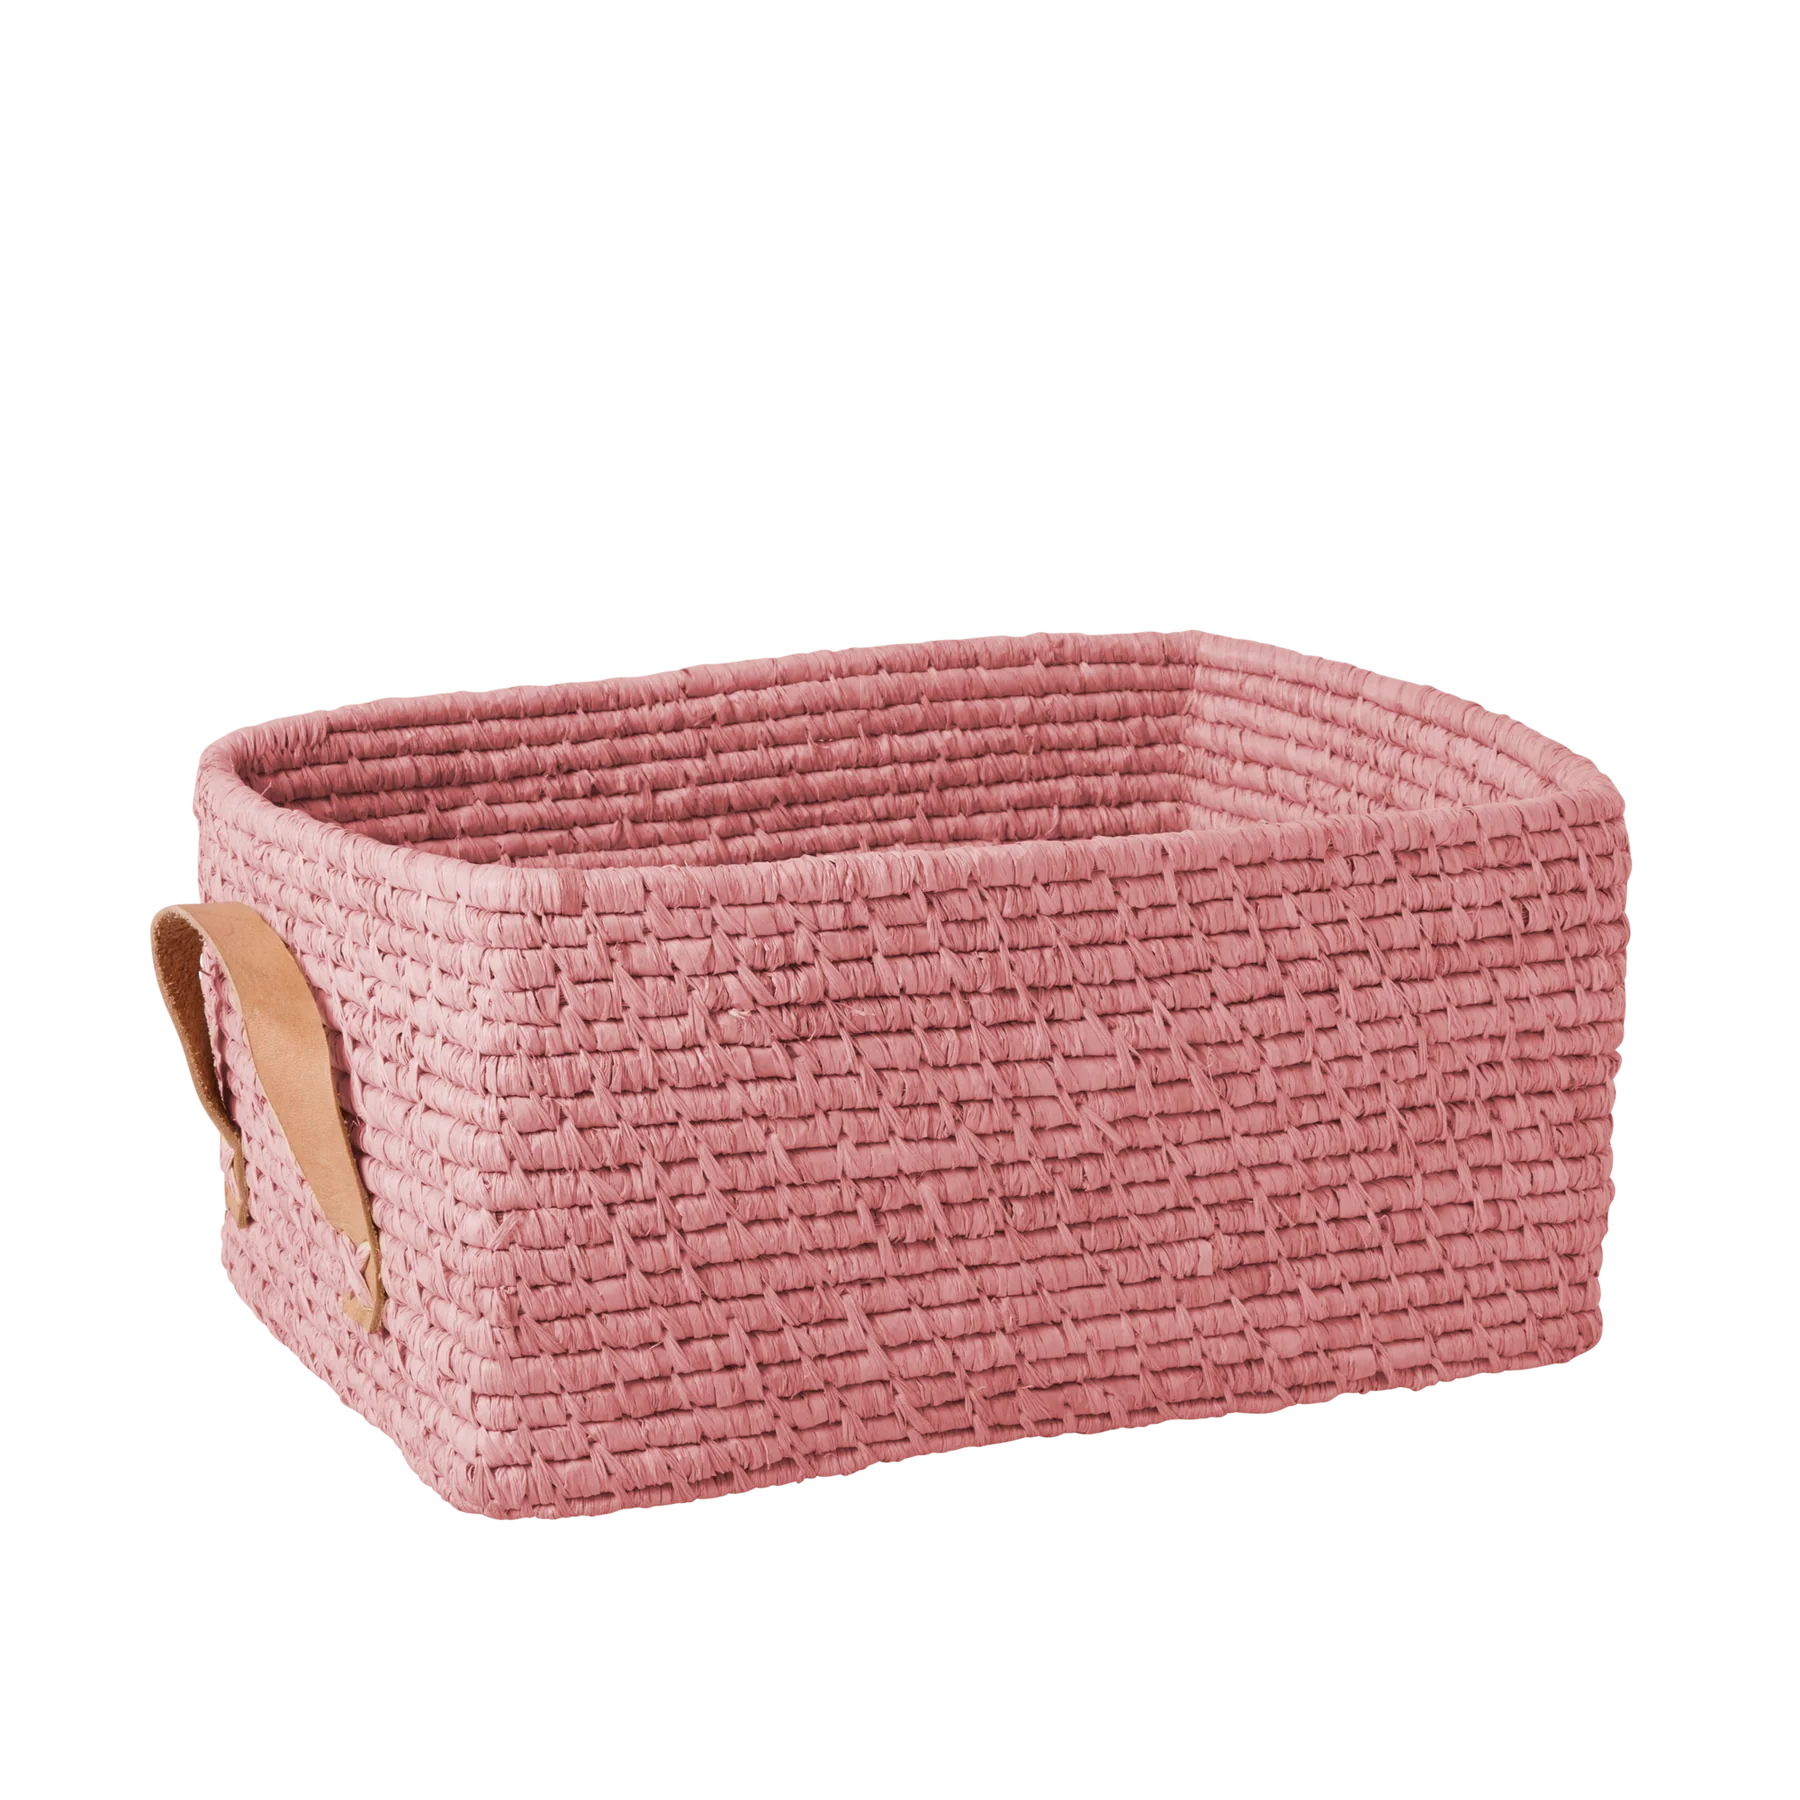 Soft Pink Rectangular Raffia Basket - Rice DK